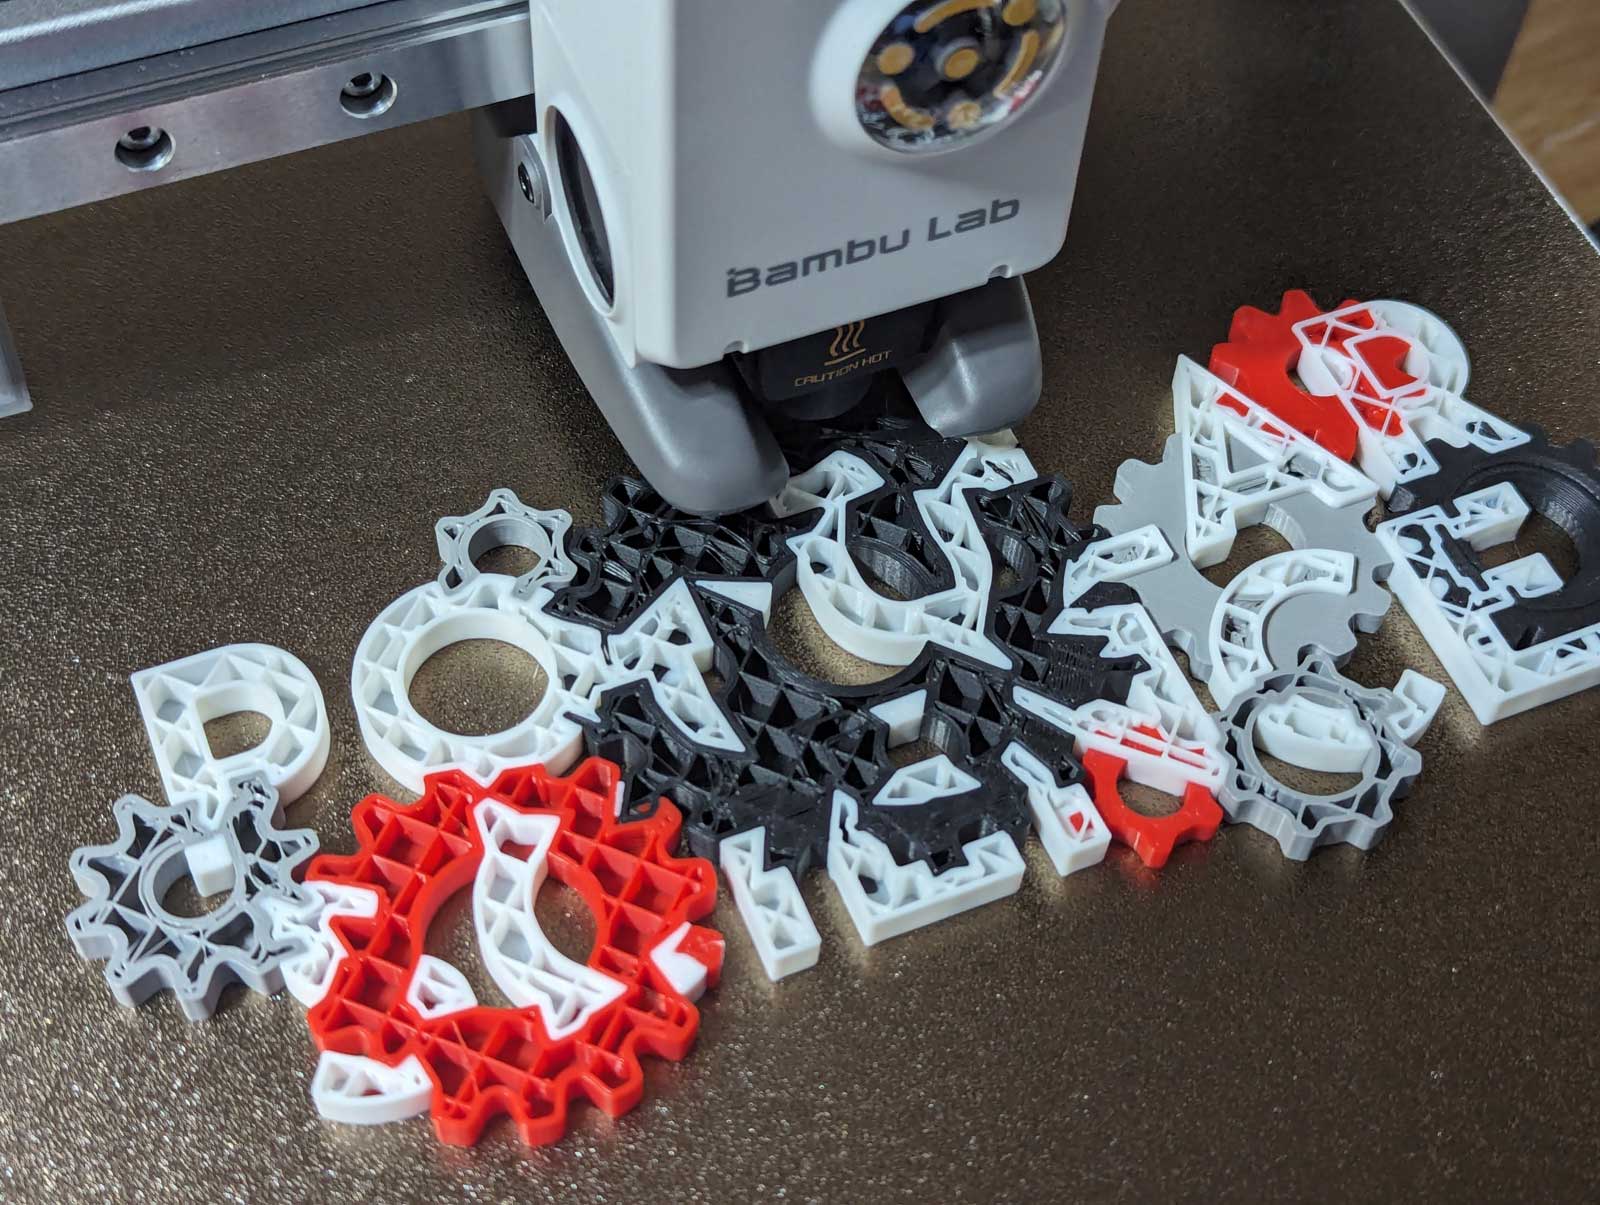 A close-up of the Bambu Labs A1 3D printer's print head as it prints